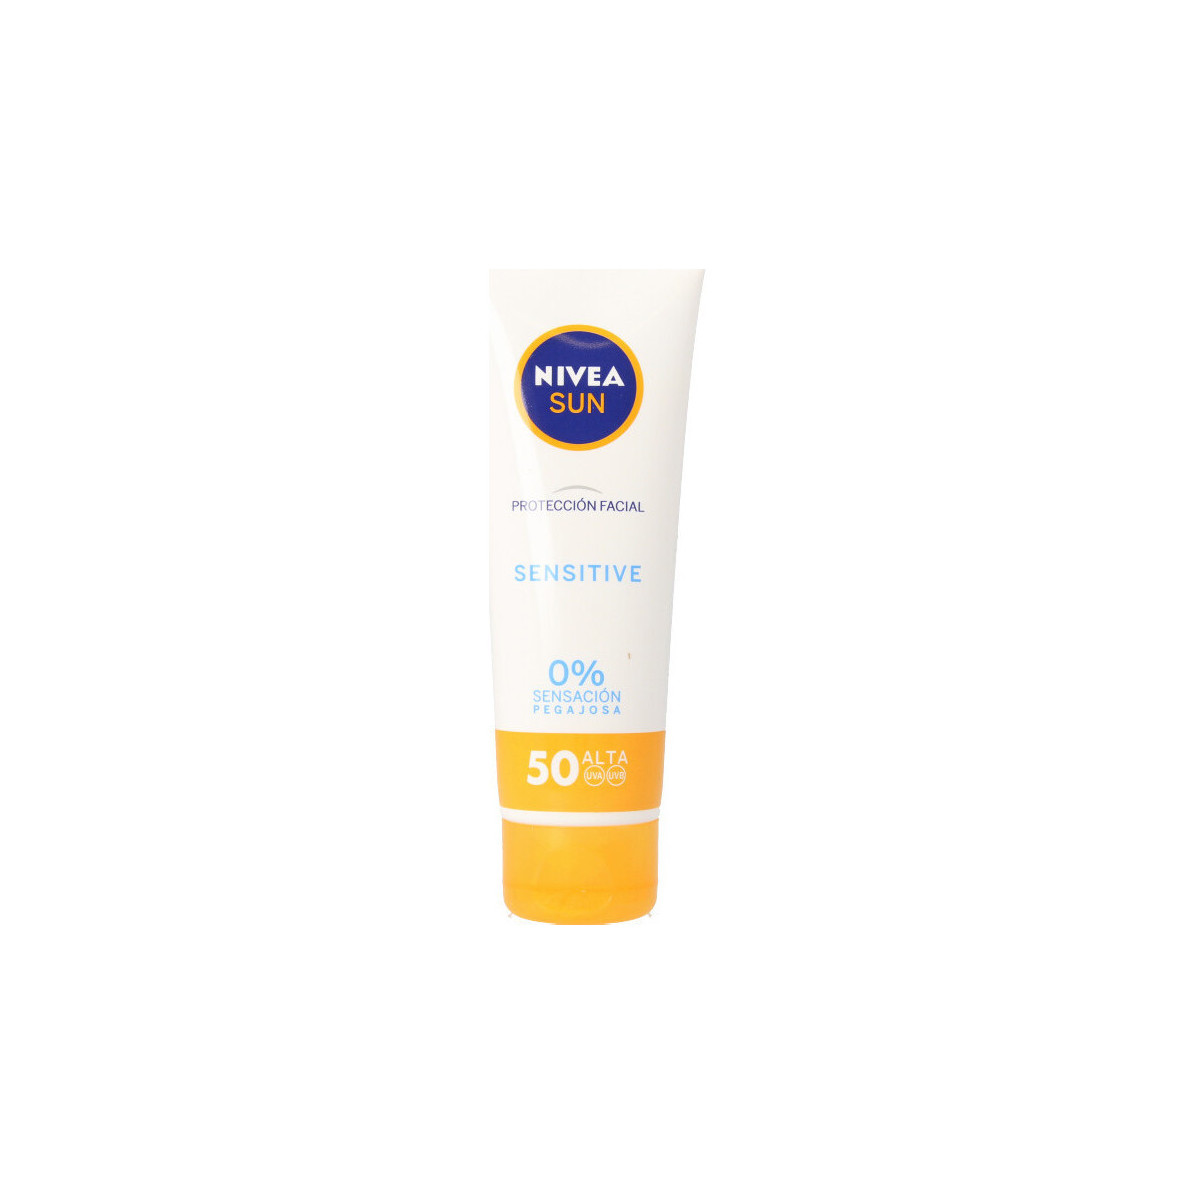 Beauty Sonnenschutz & Sonnenpflege Nivea Sun Facial Sensitive Spf50 